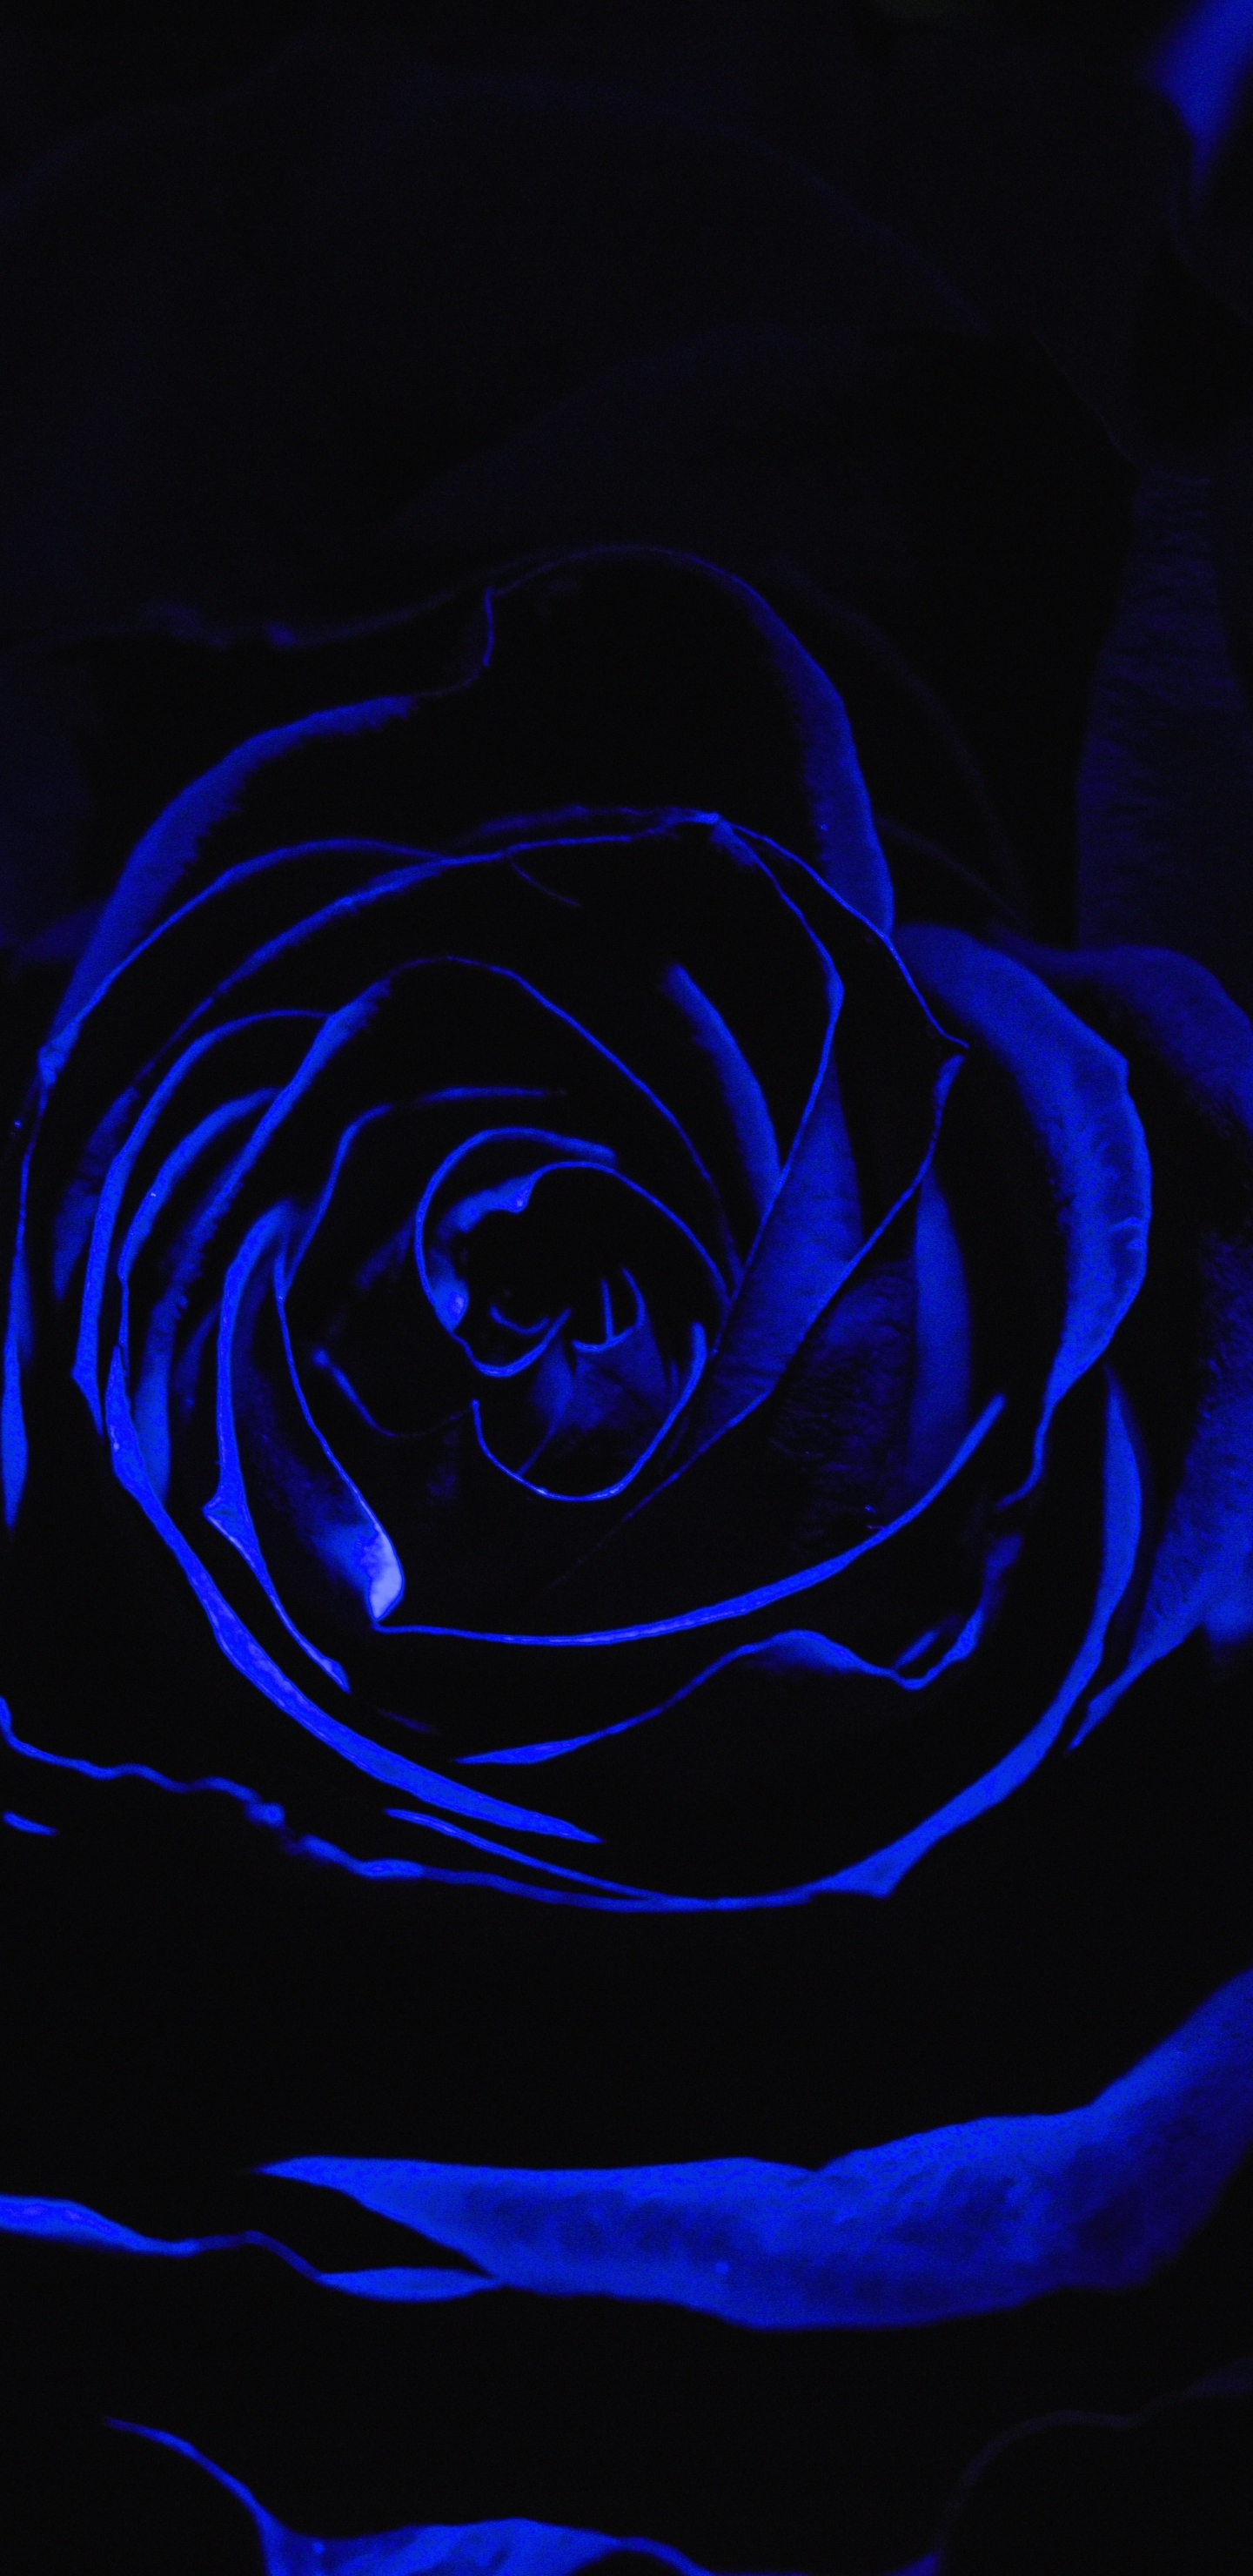 Download wallpaper 1440x2960 blue rose, dark, close up, samsung galaxy s8,  samsung galaxy s8 plus, 1440x2960 hd background, 10127